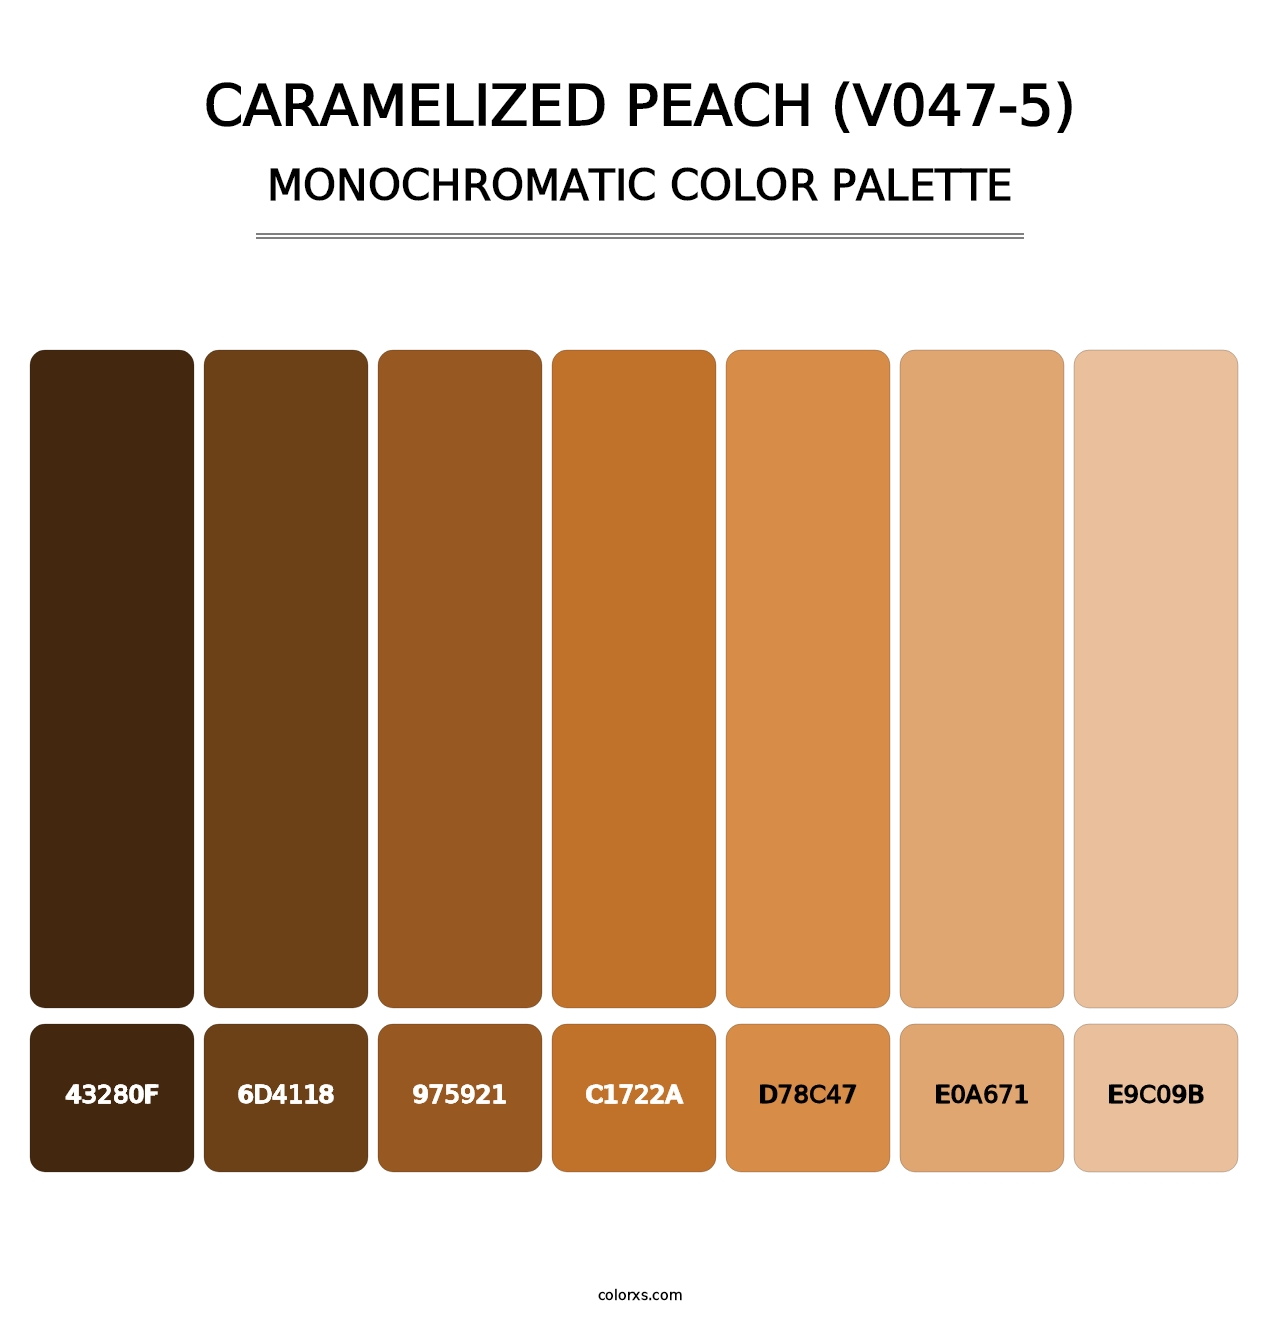 Caramelized Peach (V047-5) - Monochromatic Color Palette